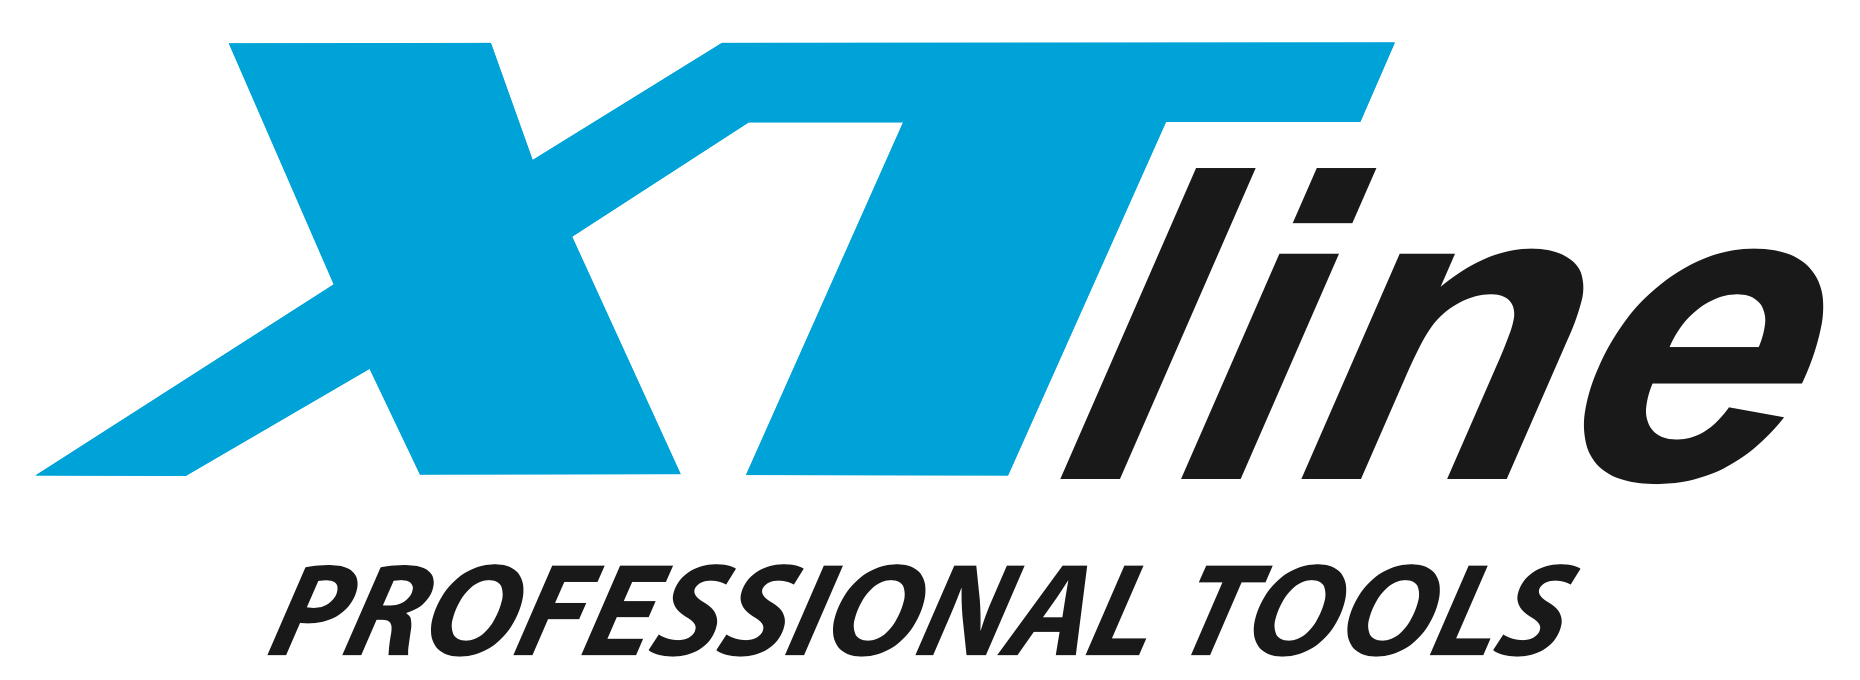 XTline_logo